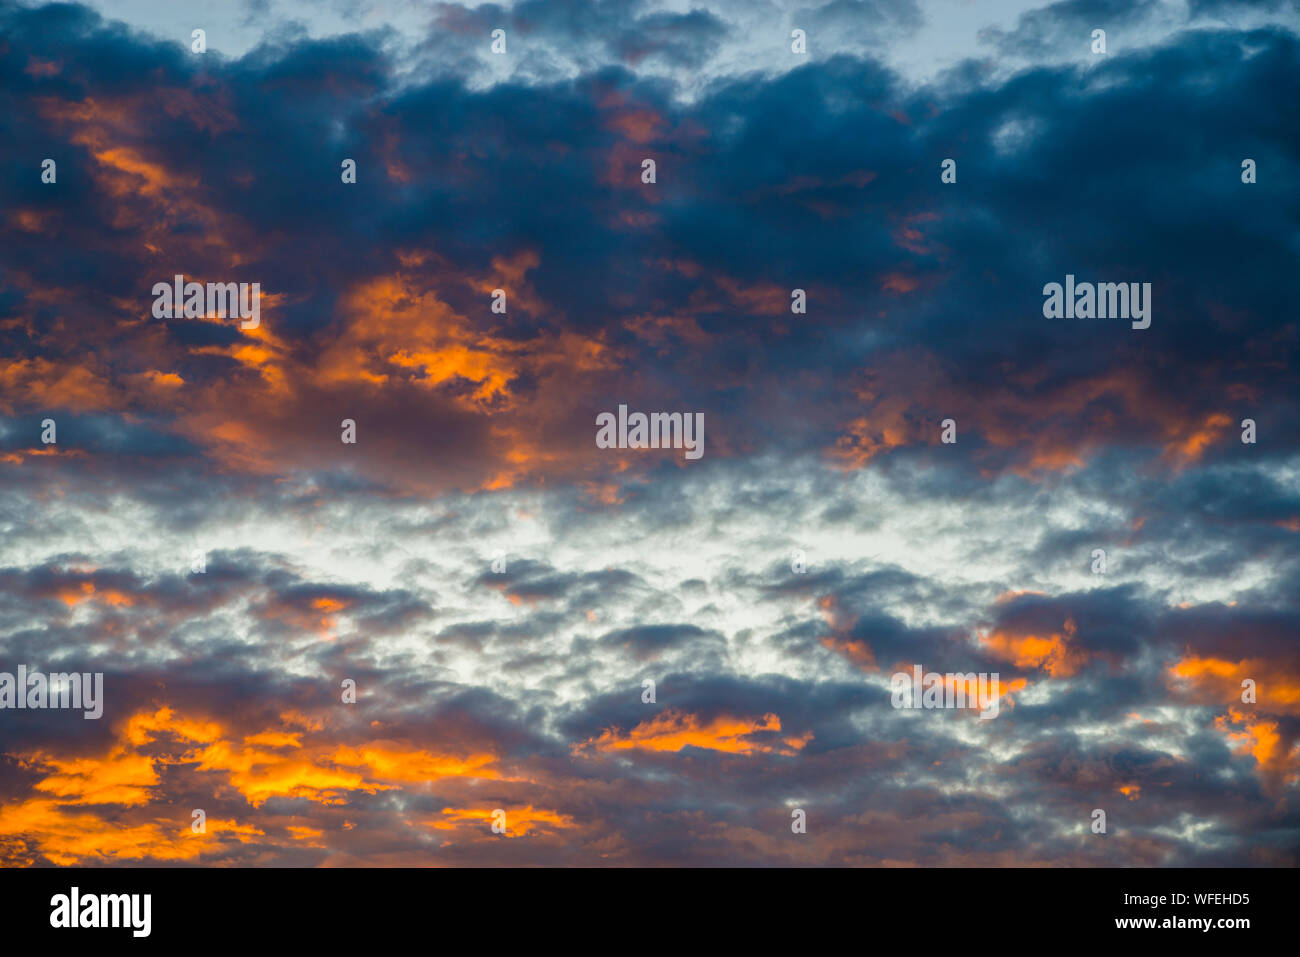 Sunset cloudy sky. Stock Photo